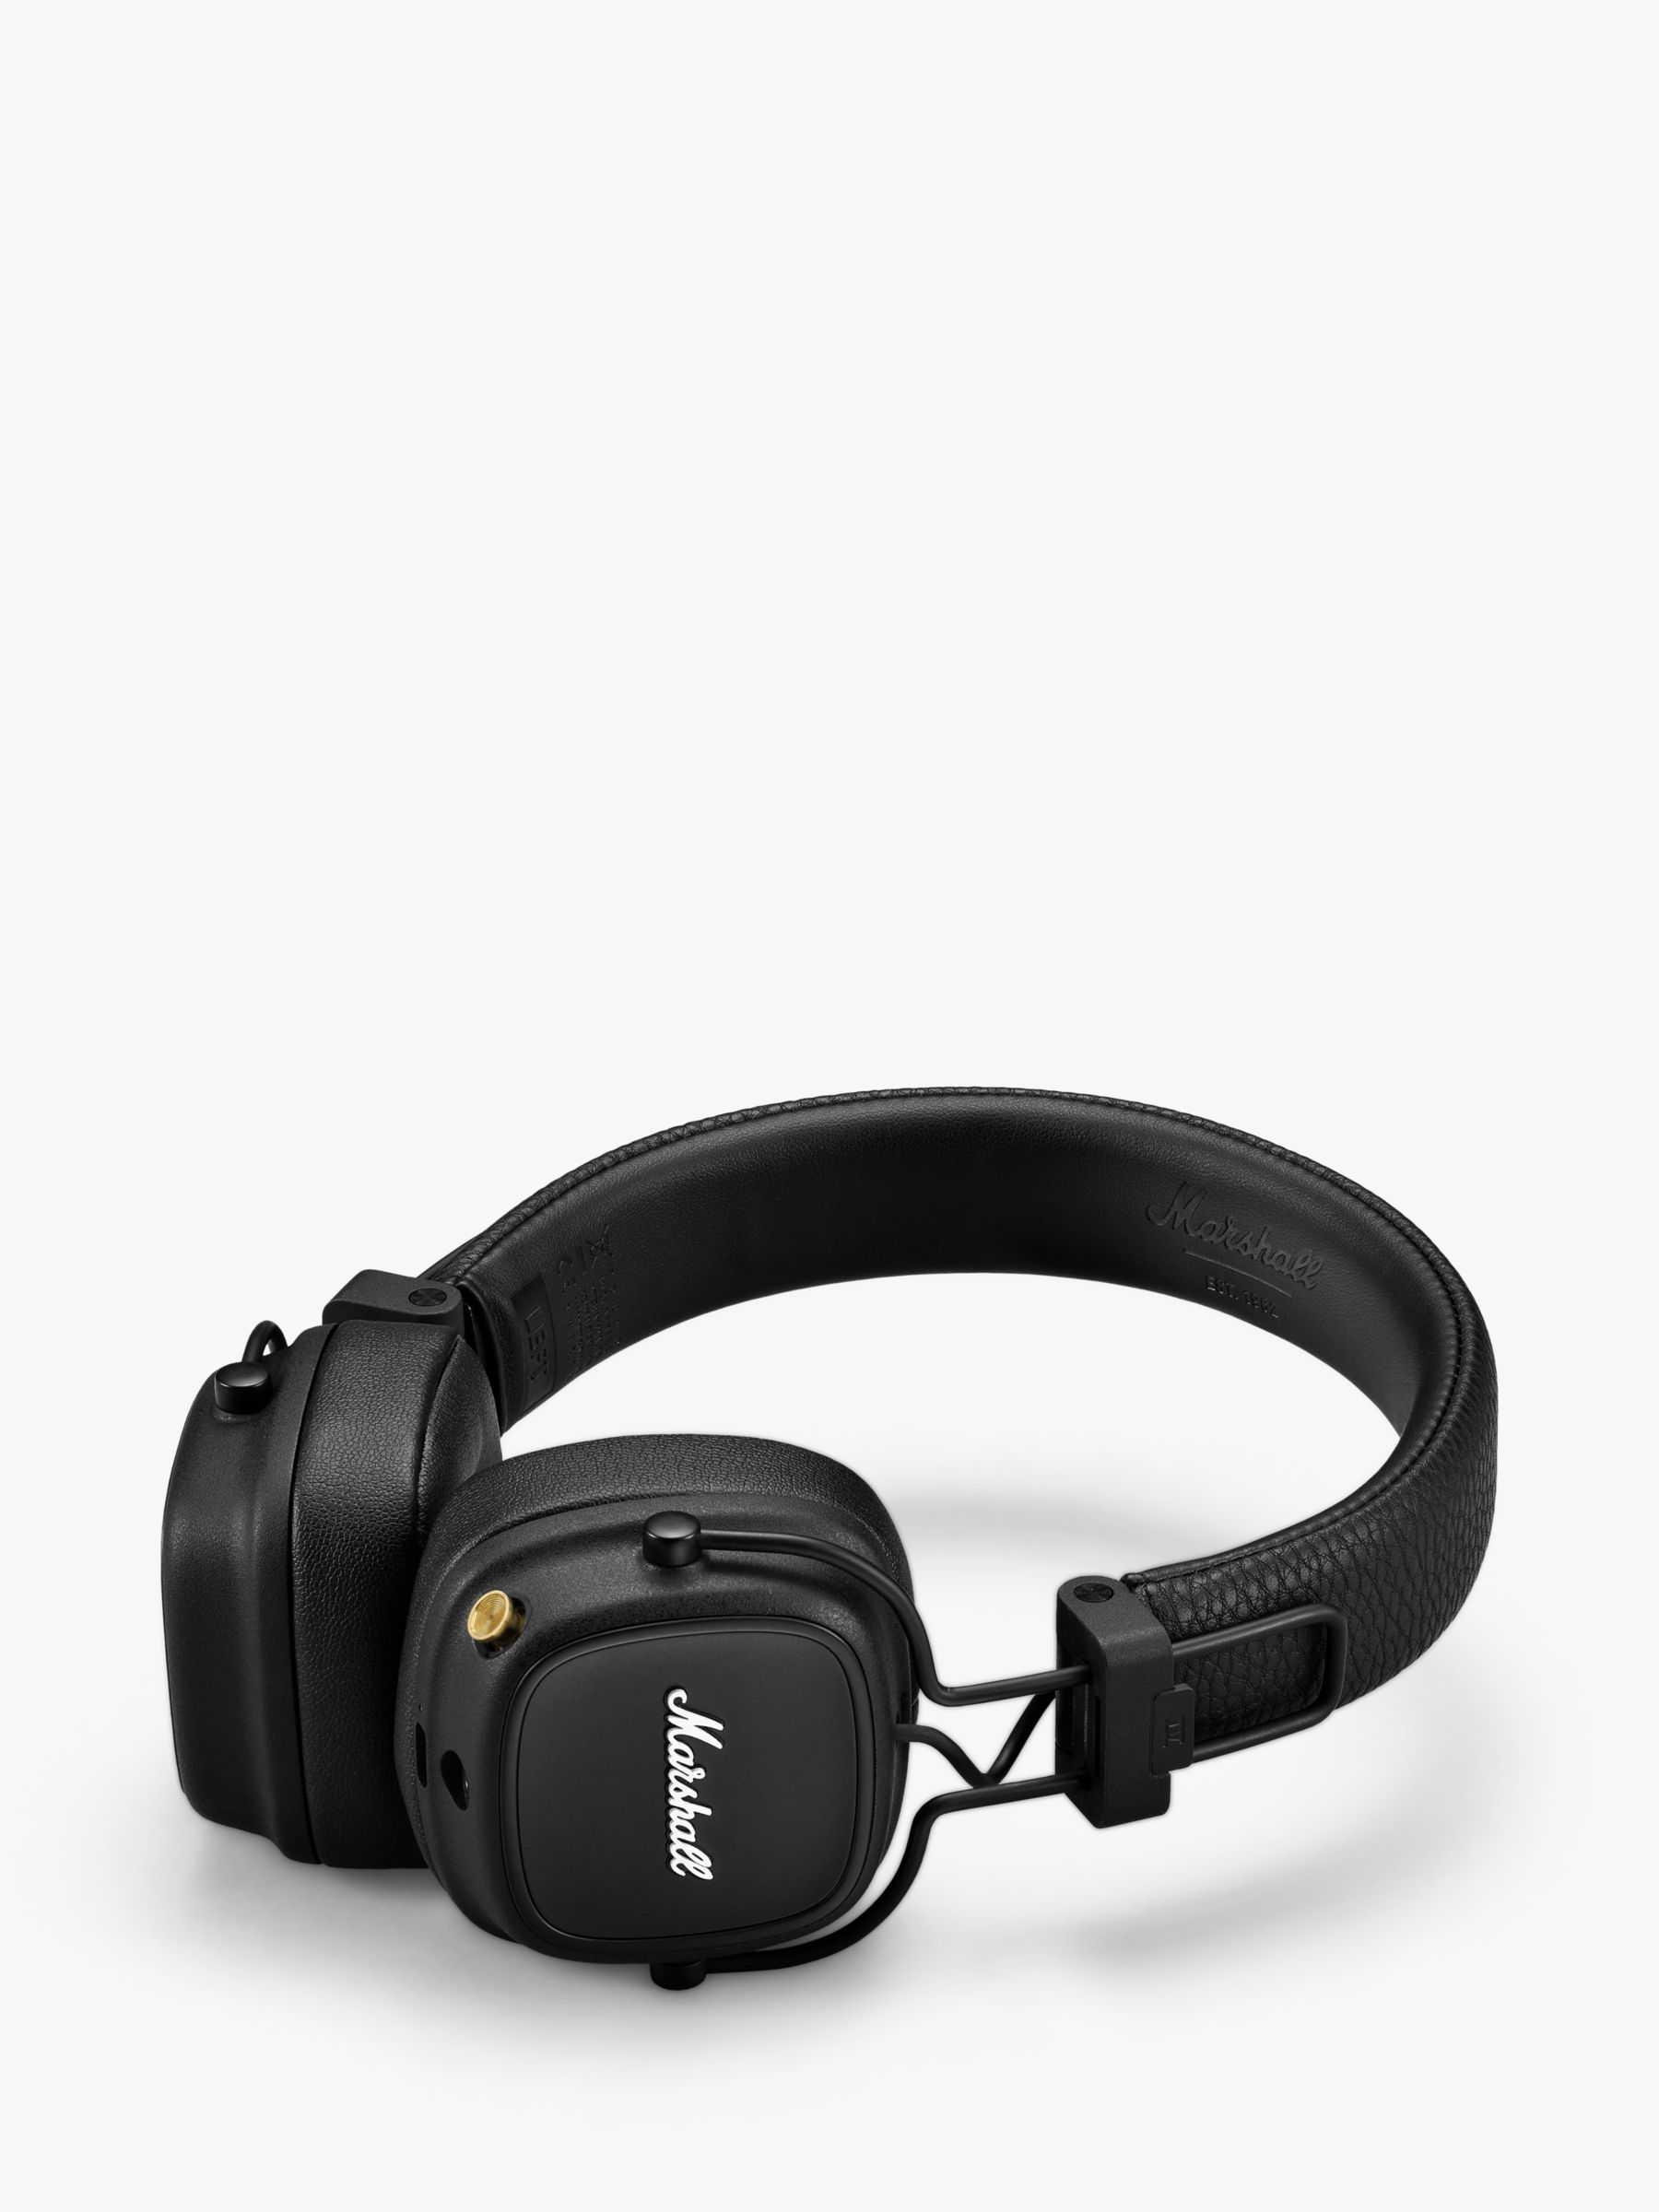 Marshall - Major IV Bluetooth Headphone with wireless charging - Black